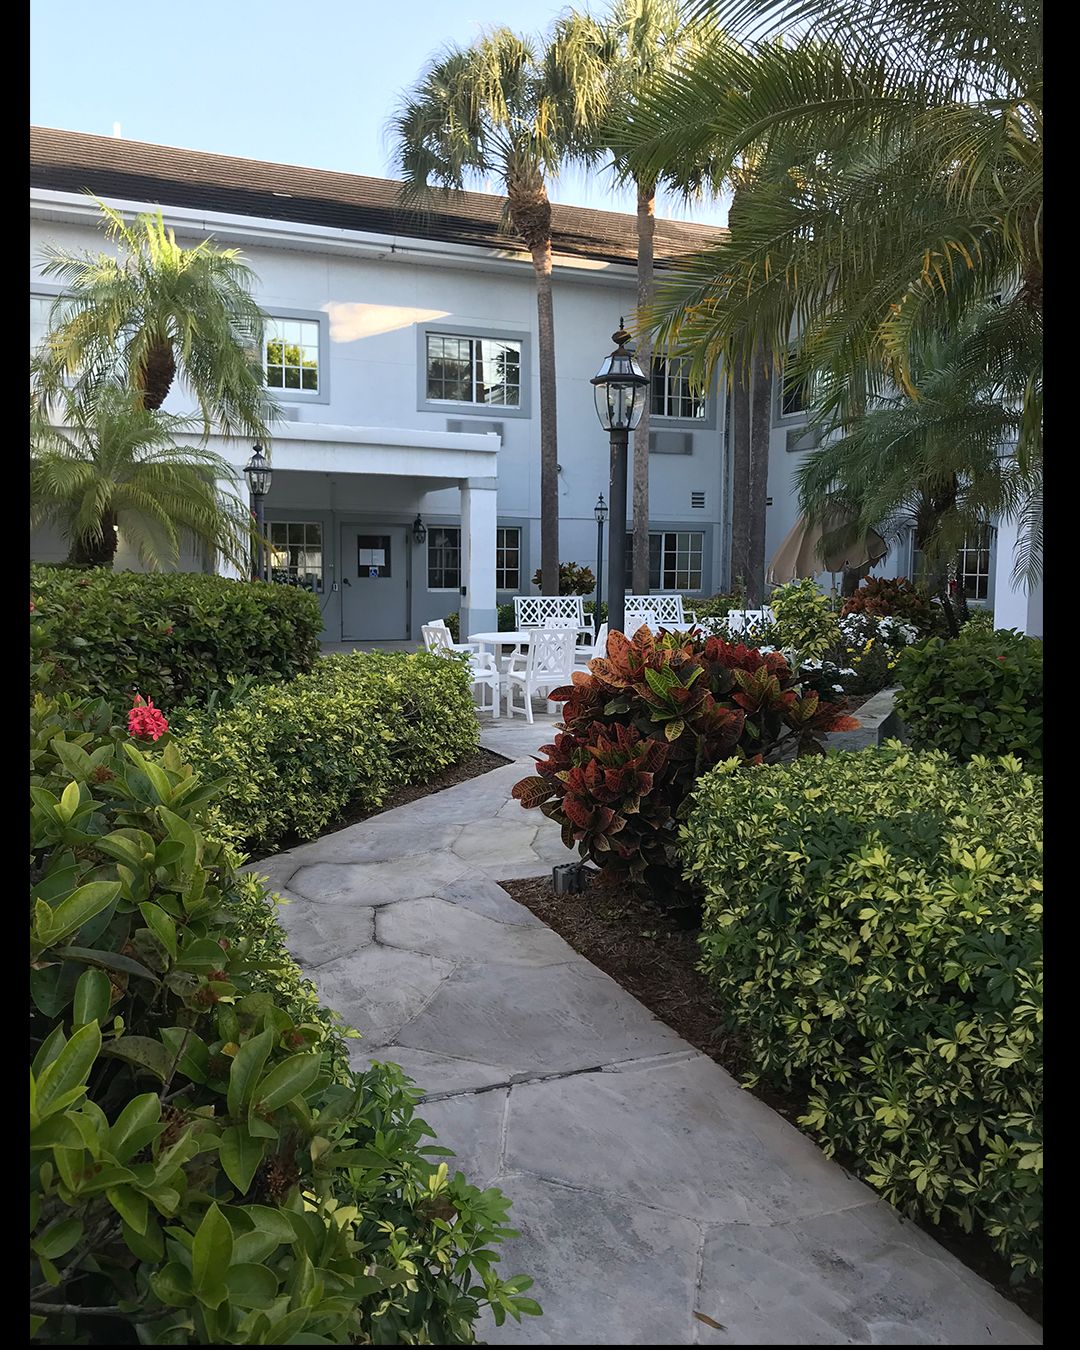 Pathway through the lush garden at Arden Courts senior living community in West Palm Beach.